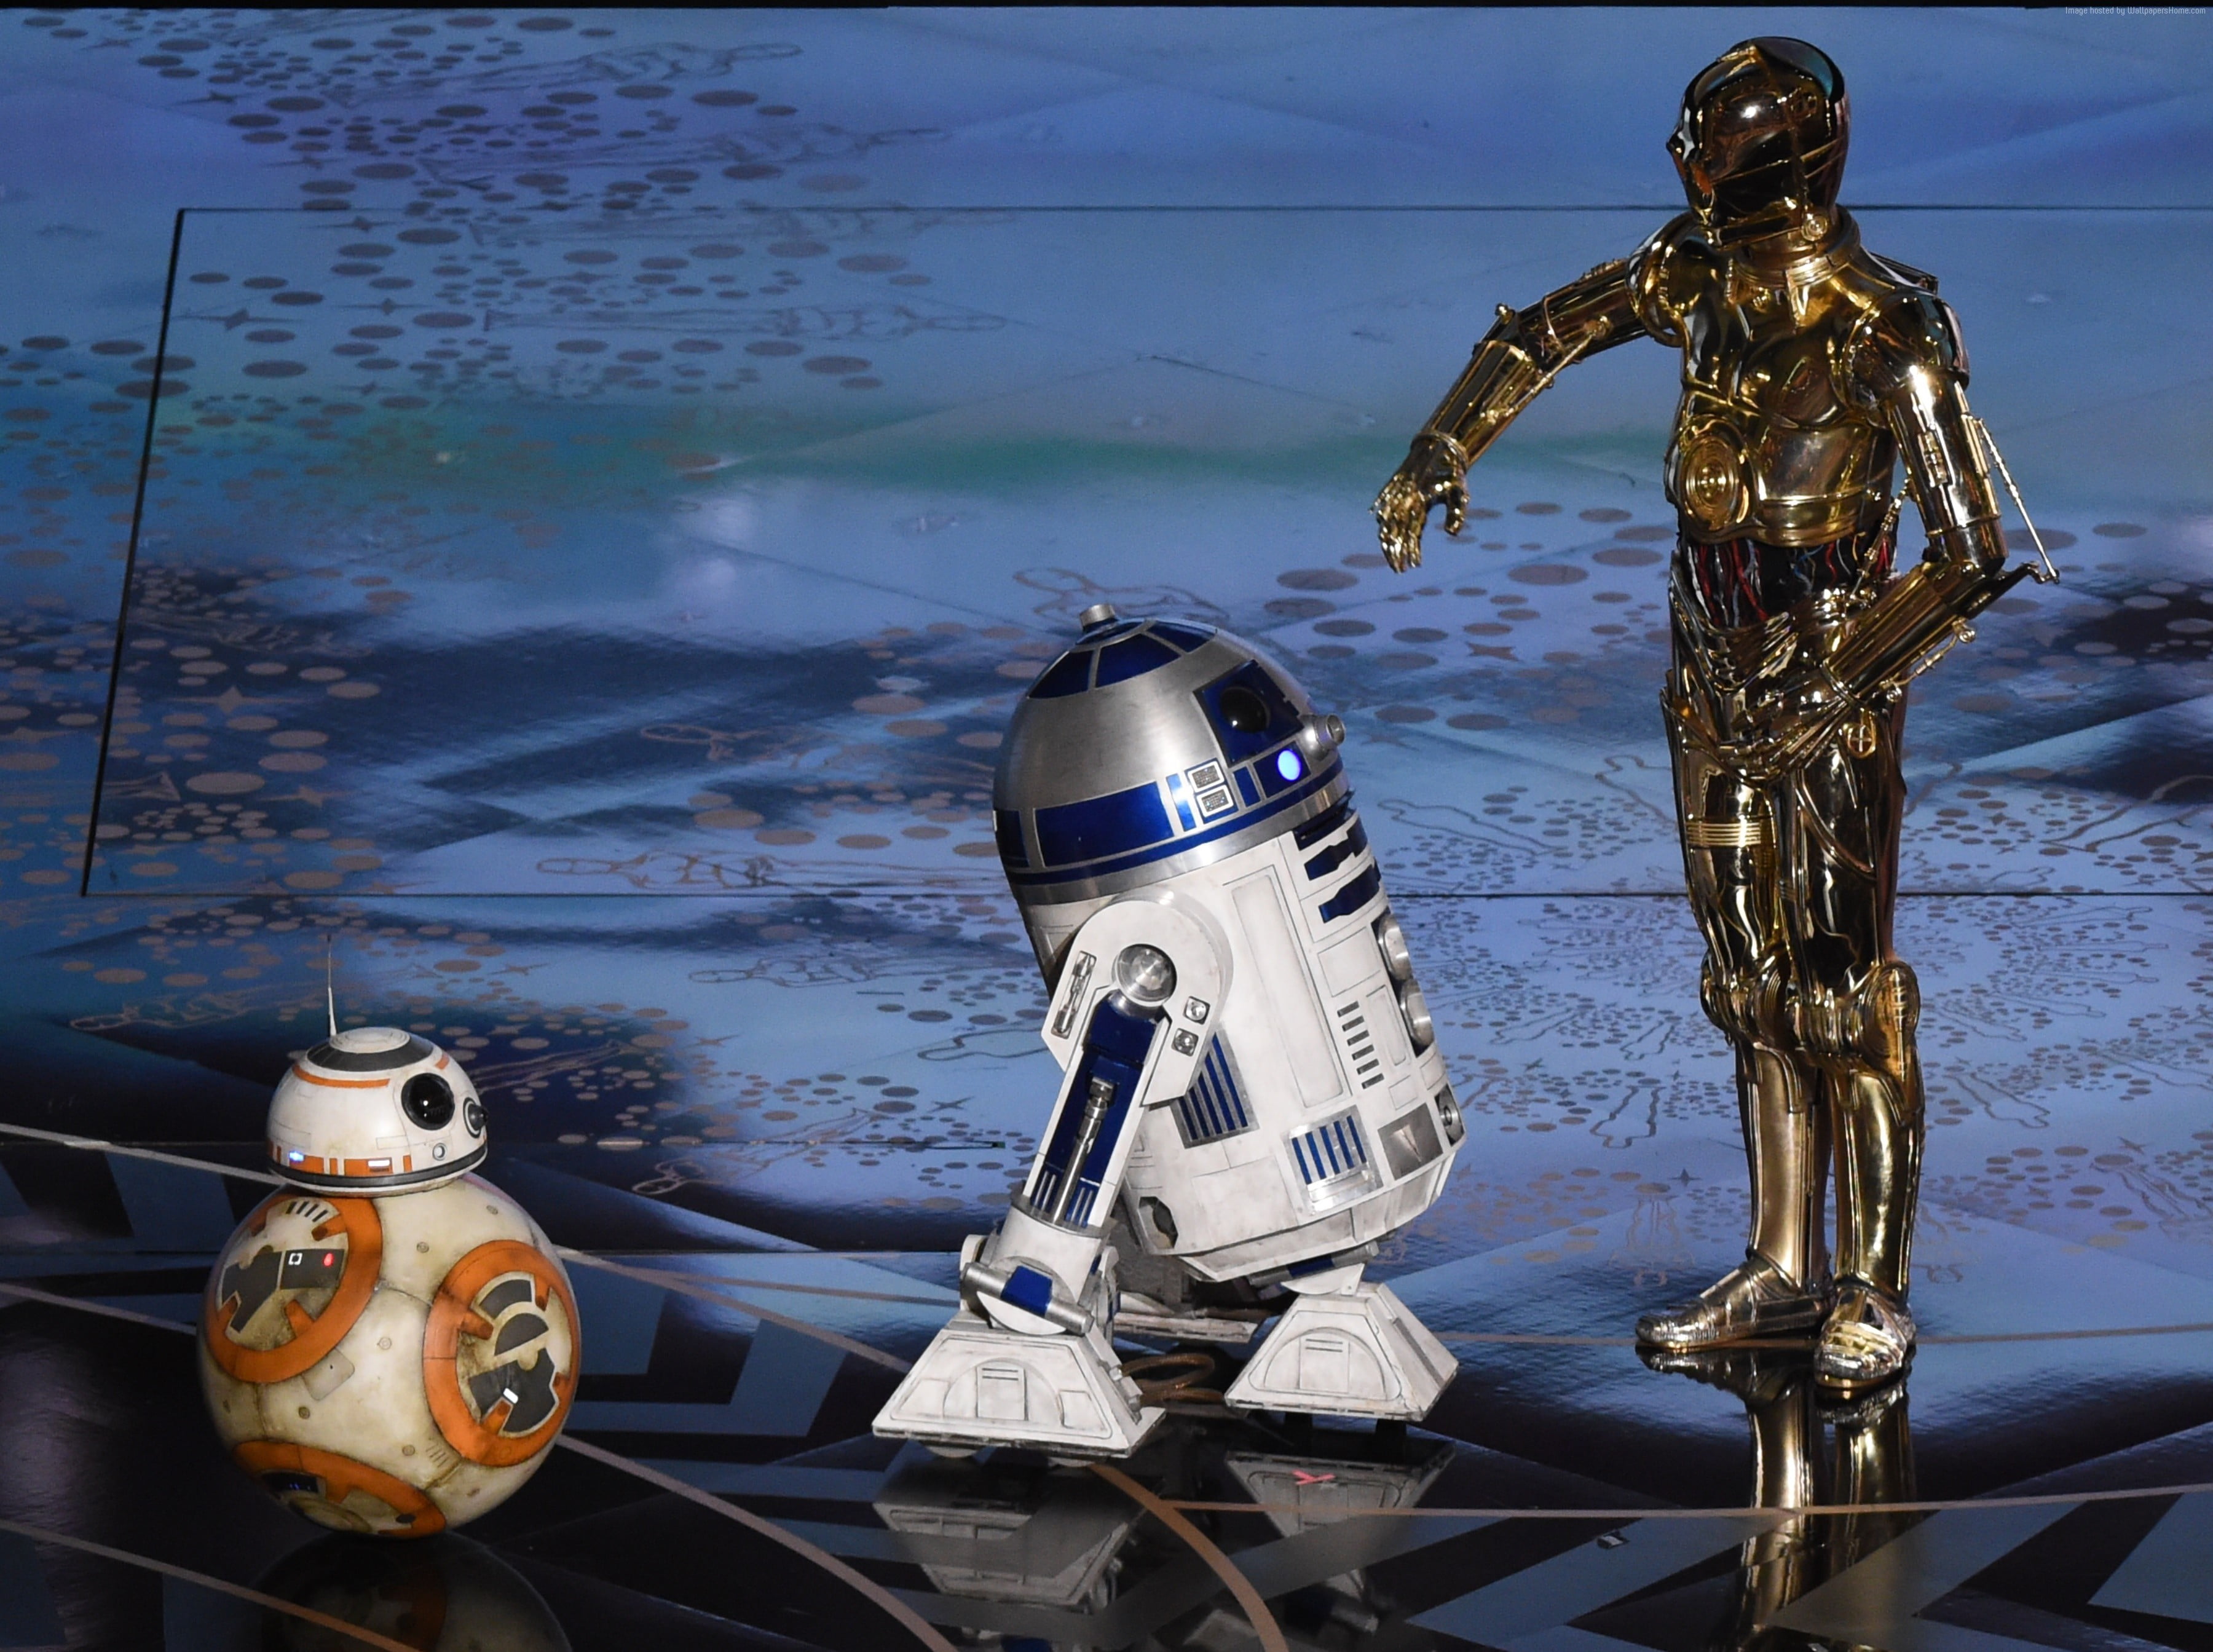 Star Wars C-3PO and R2-D2 Mini Vehicle Graphic